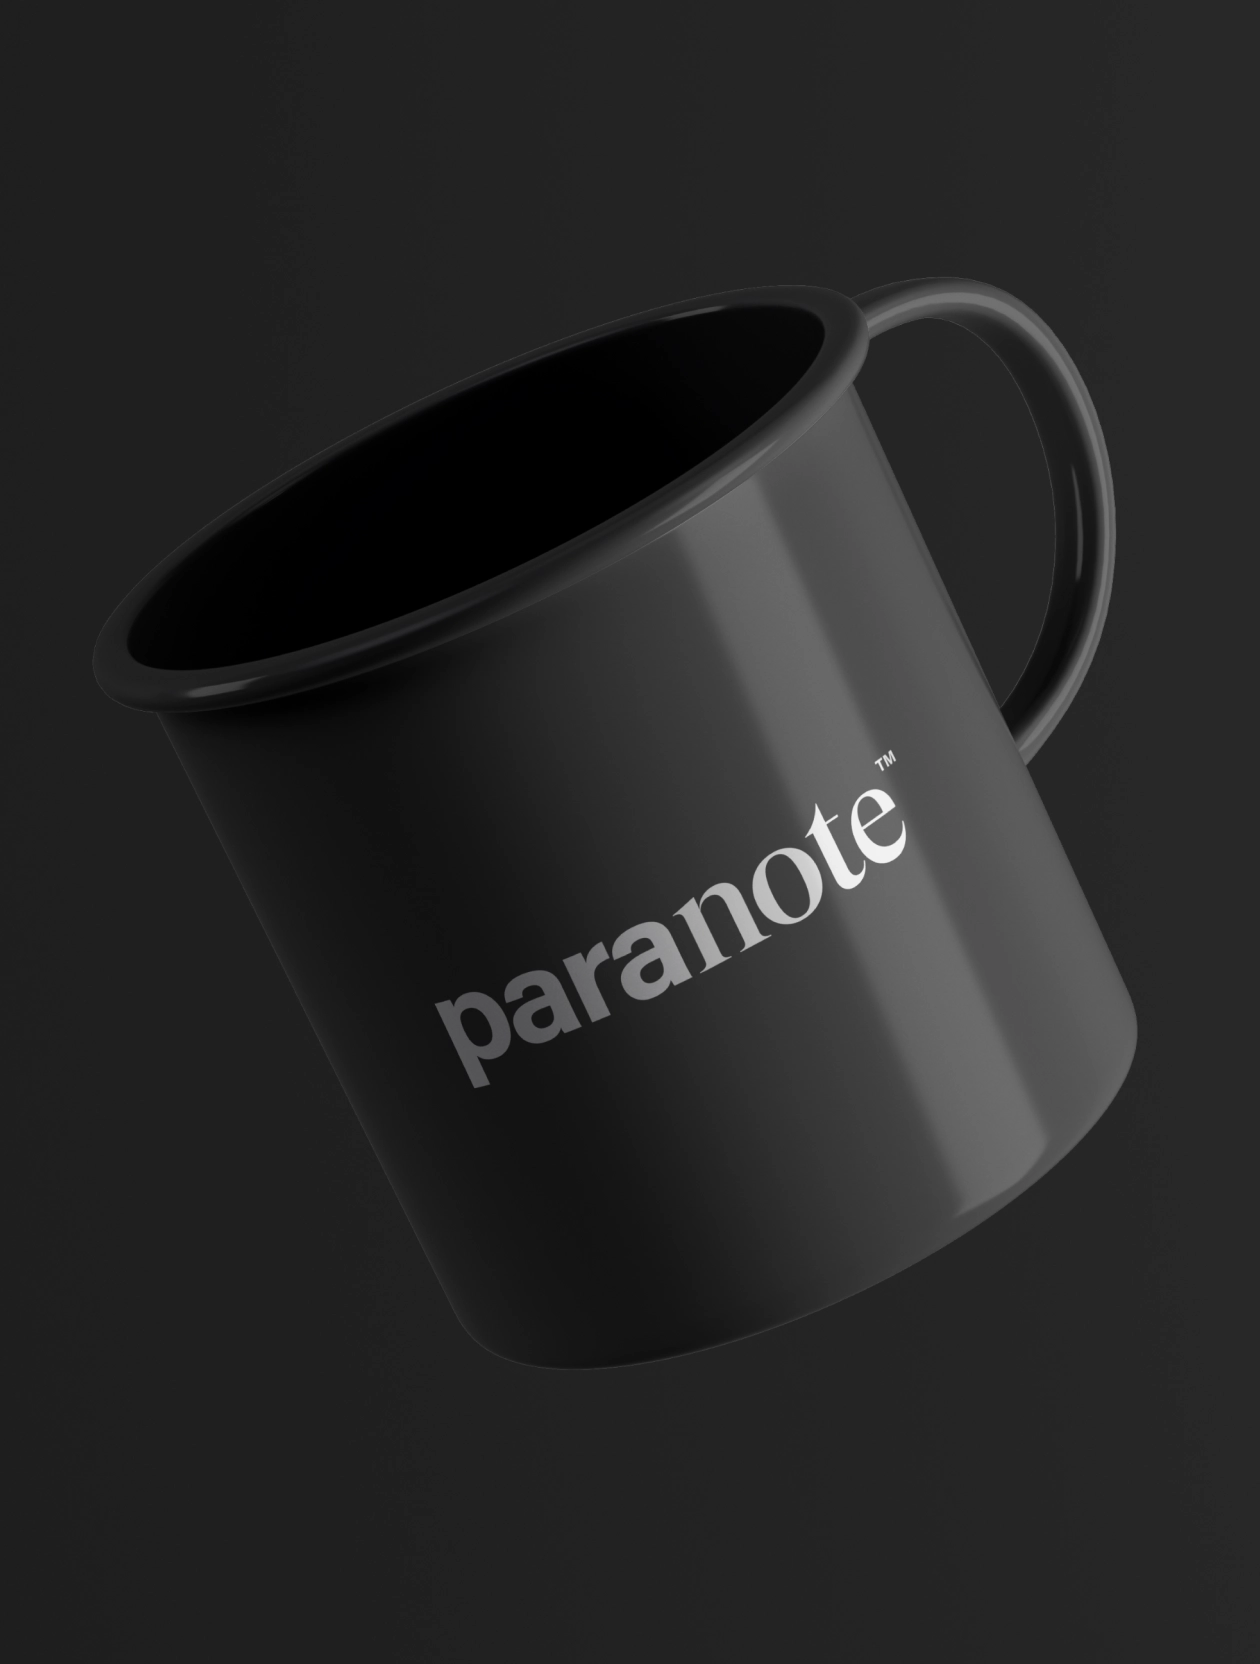 paranote-mug